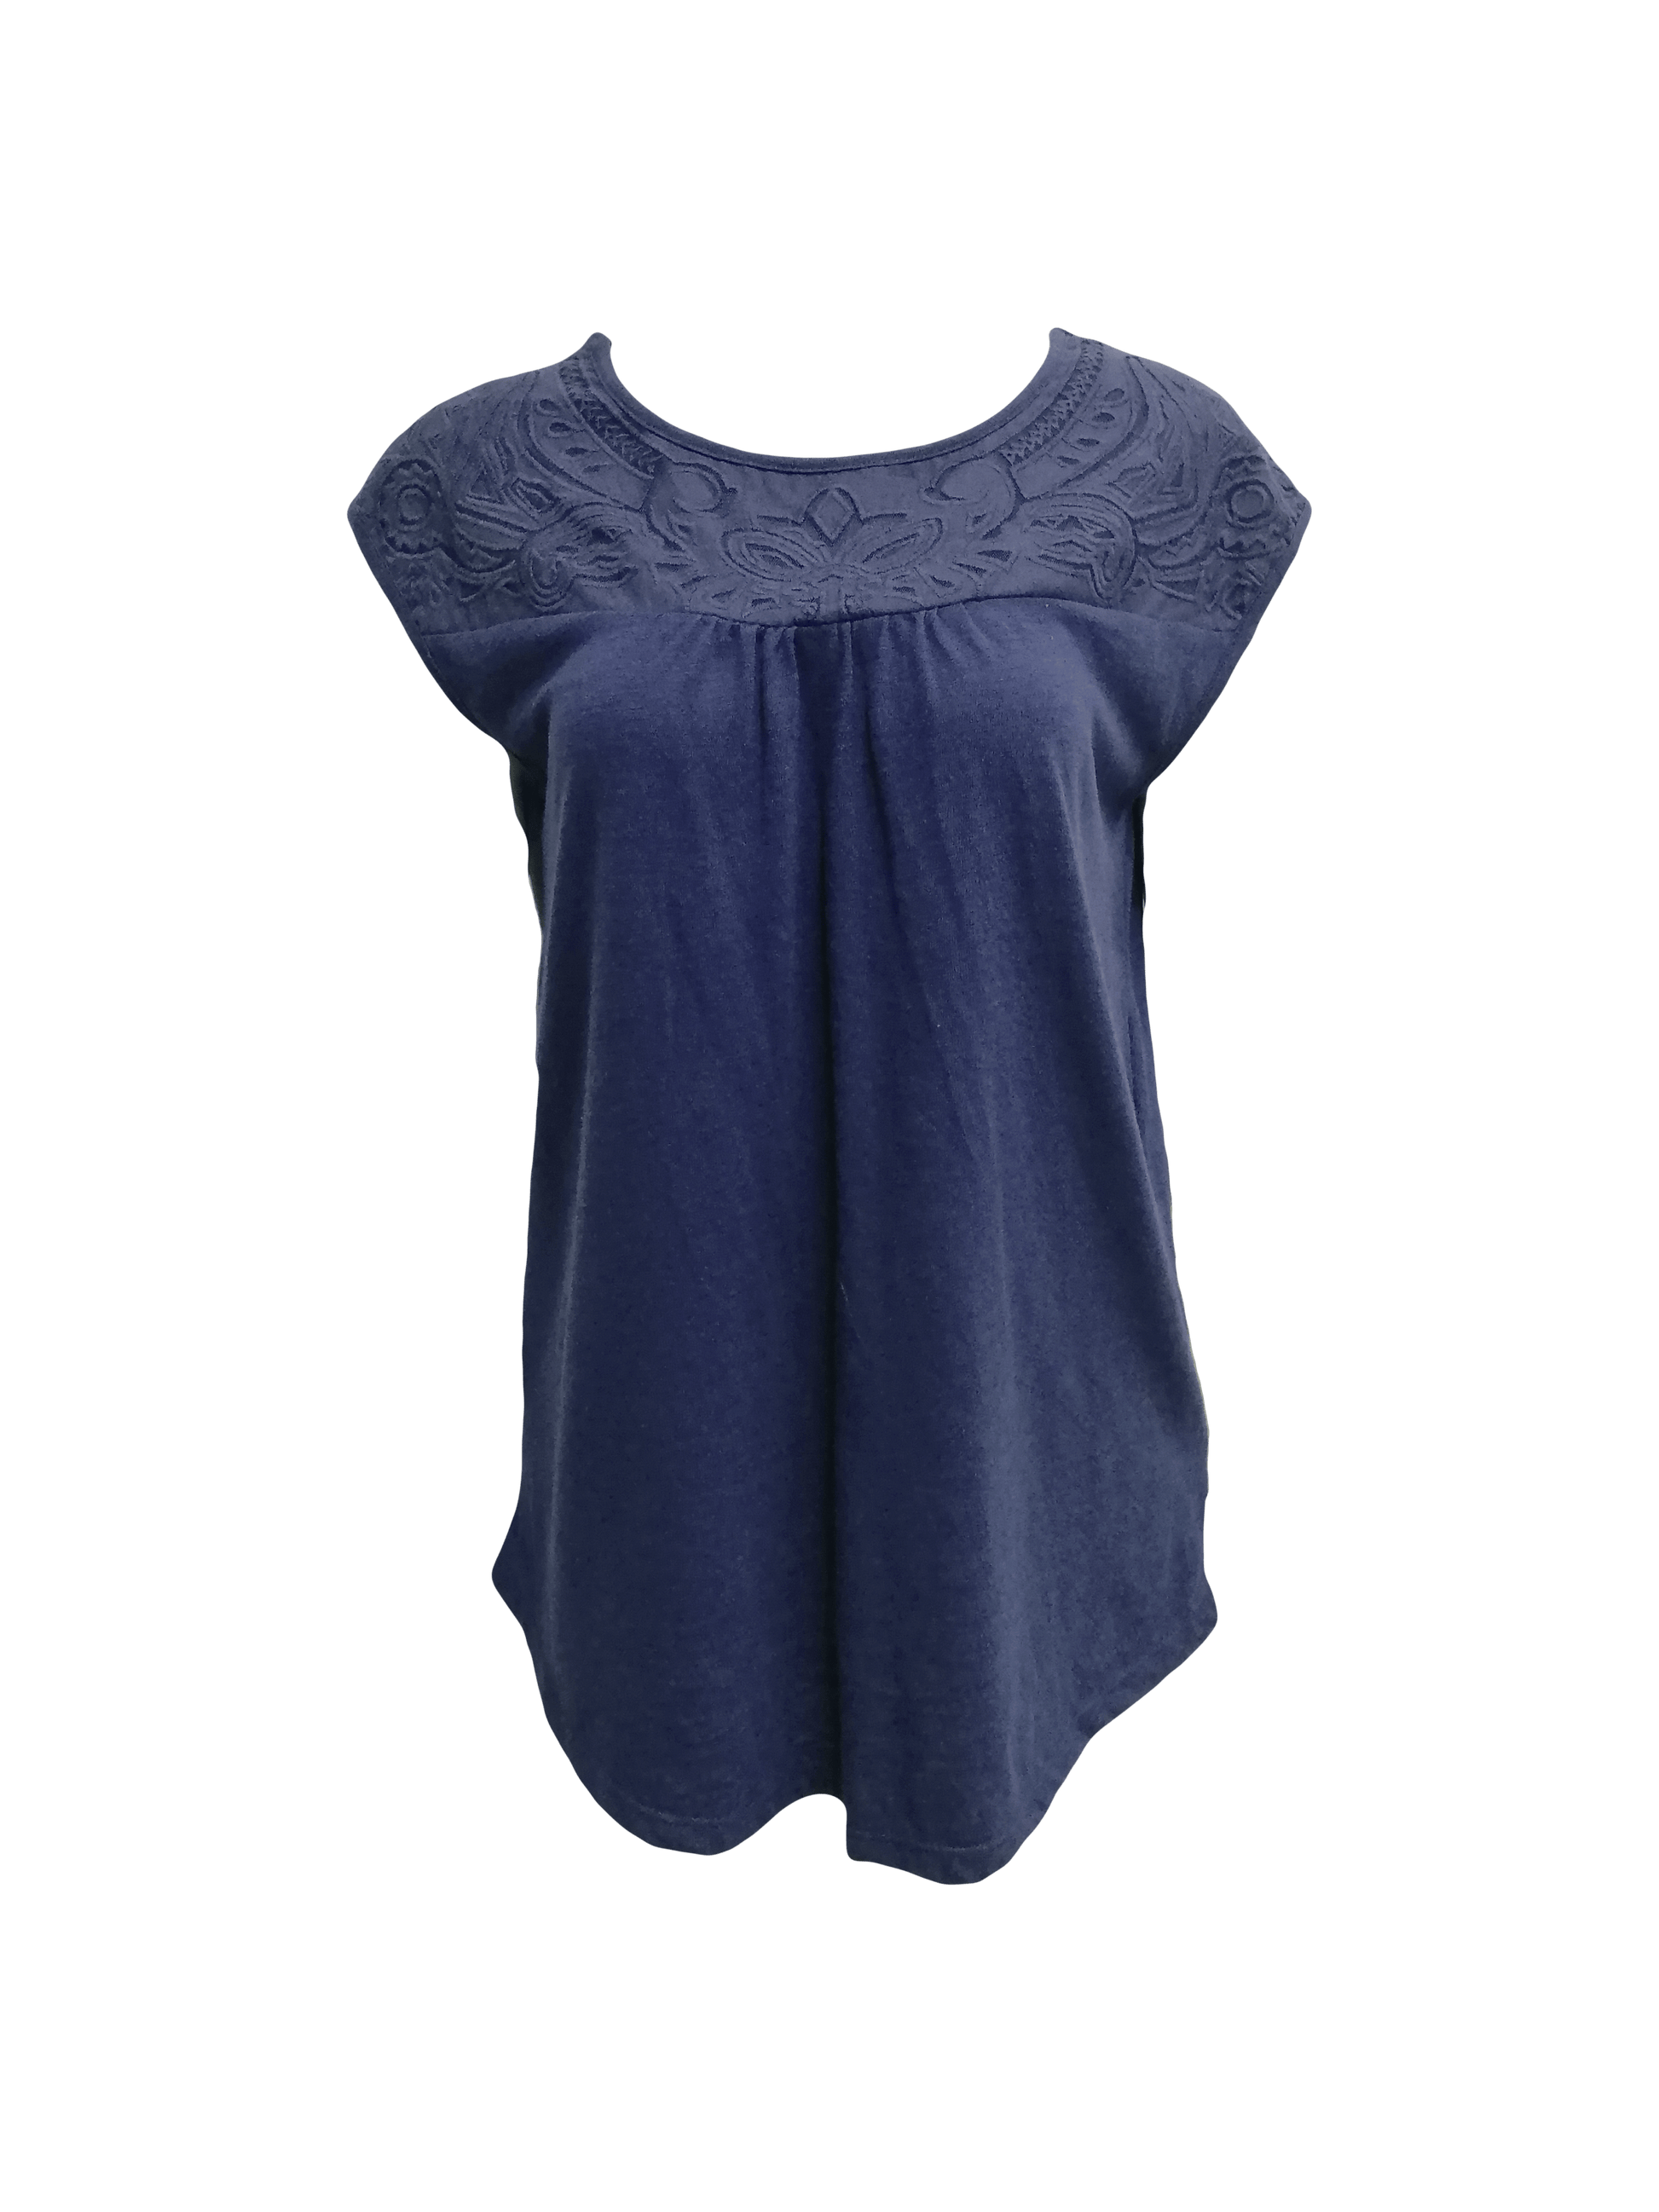 Liz Claiborne Womens Tops Small / Navy Sleeveless Engraved Shirt